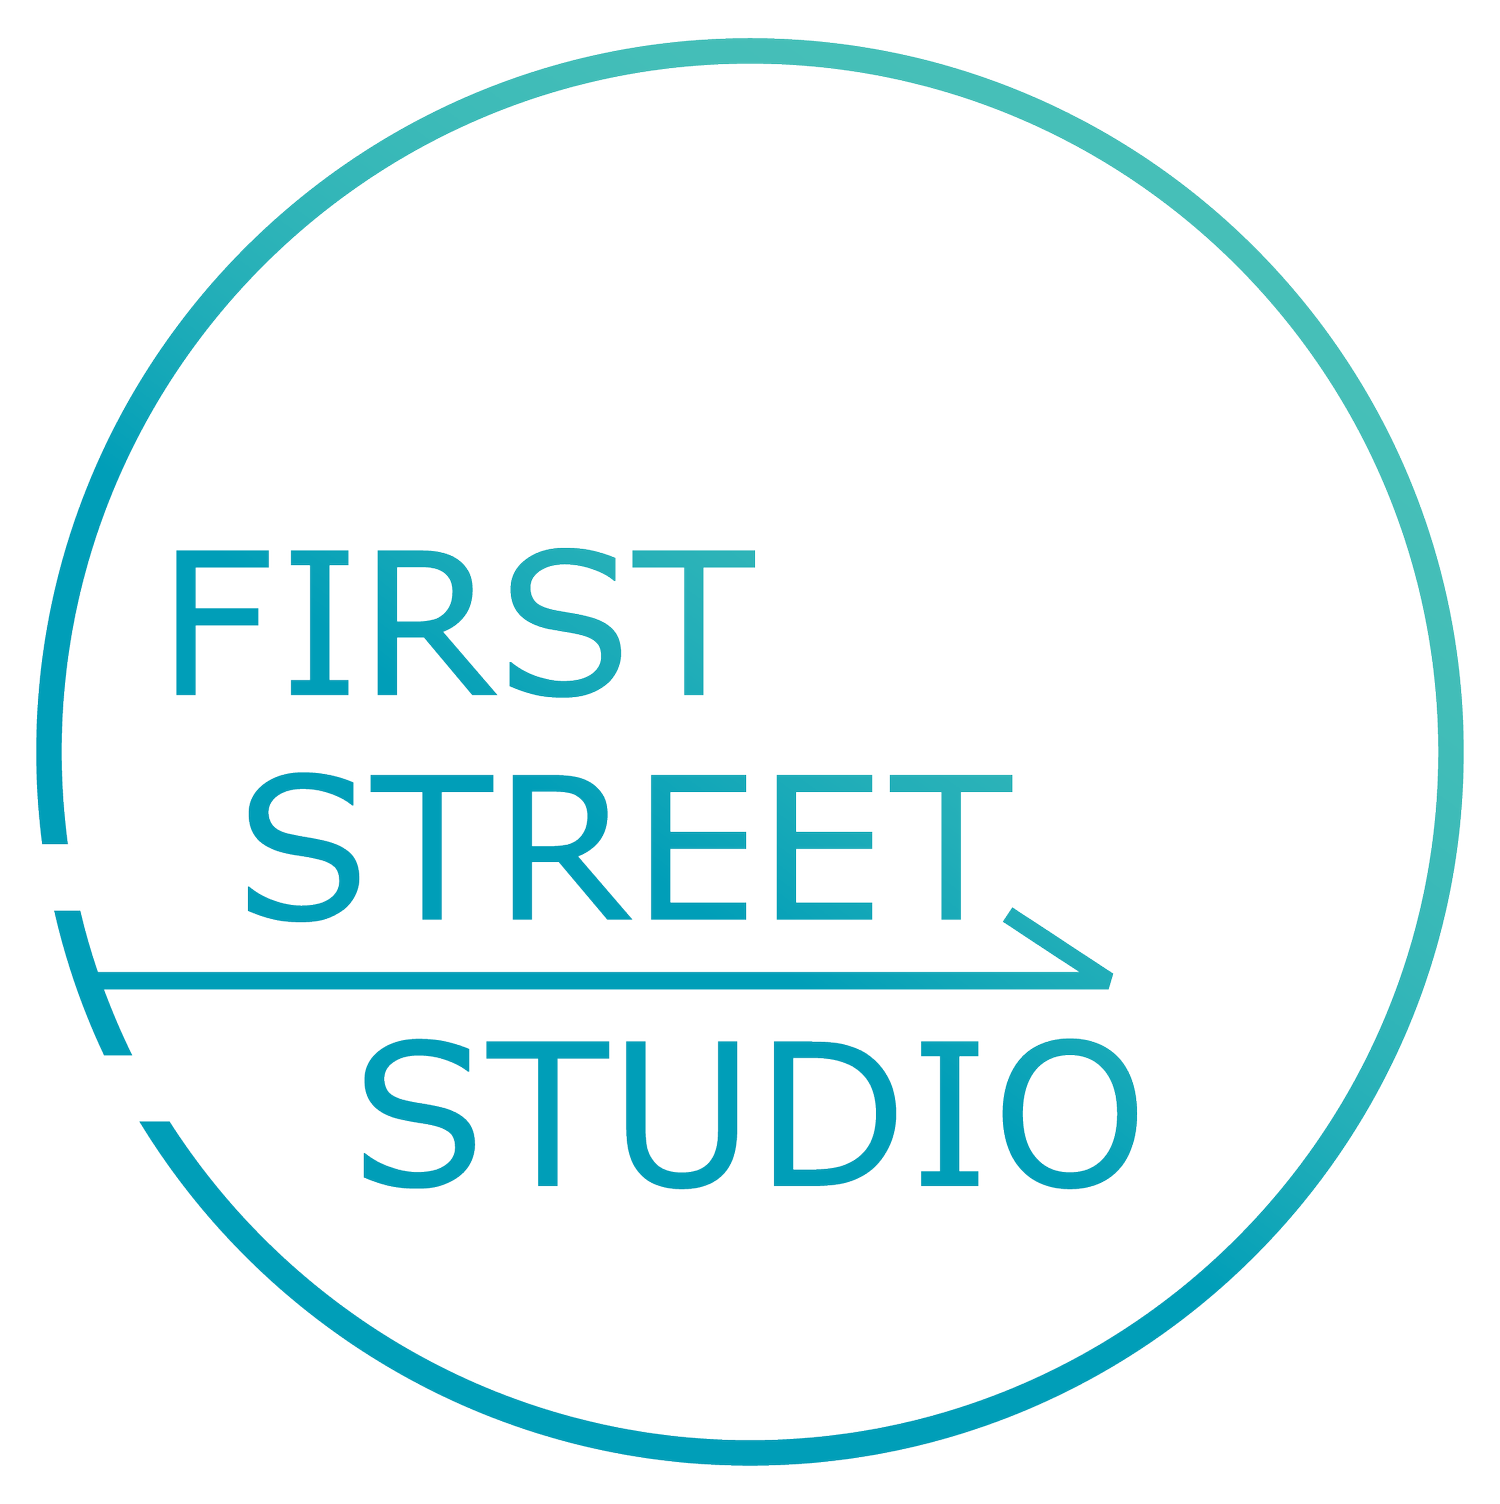 FIRST STREET STUDIO